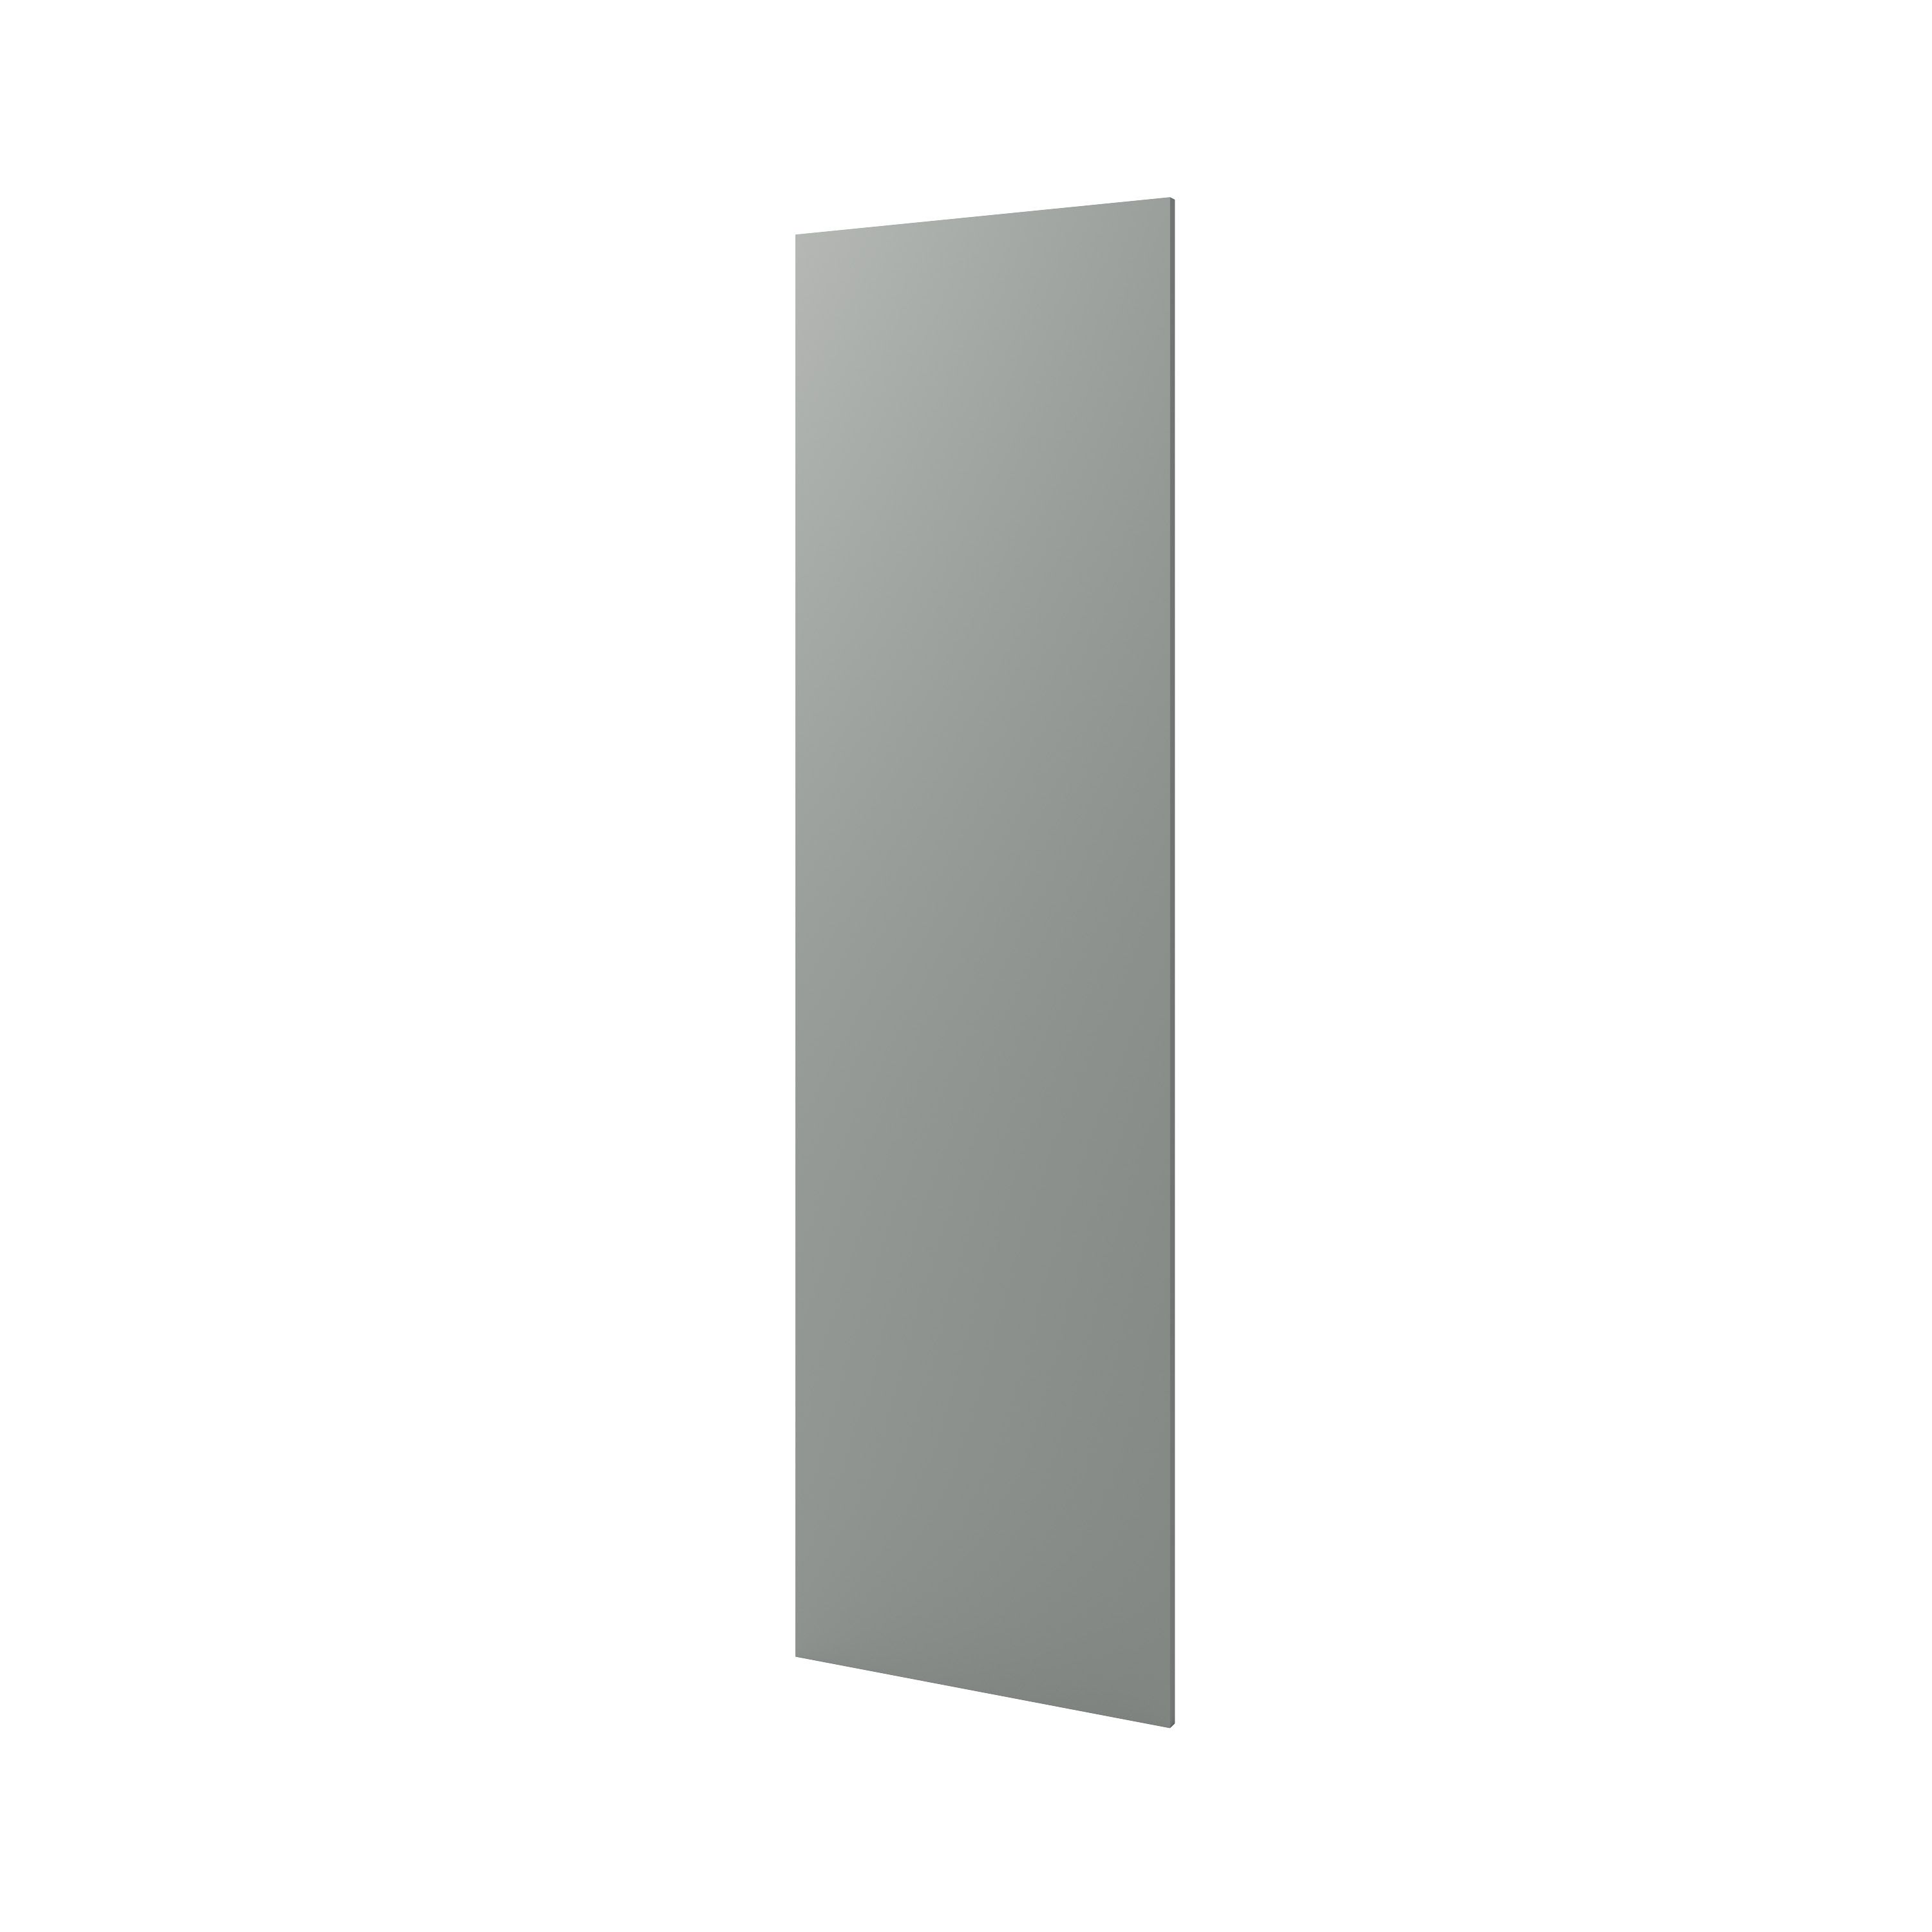 GoodHome Balsamita Matt grey slab Standard End panel (H)2010mm (W)570mm, Pair